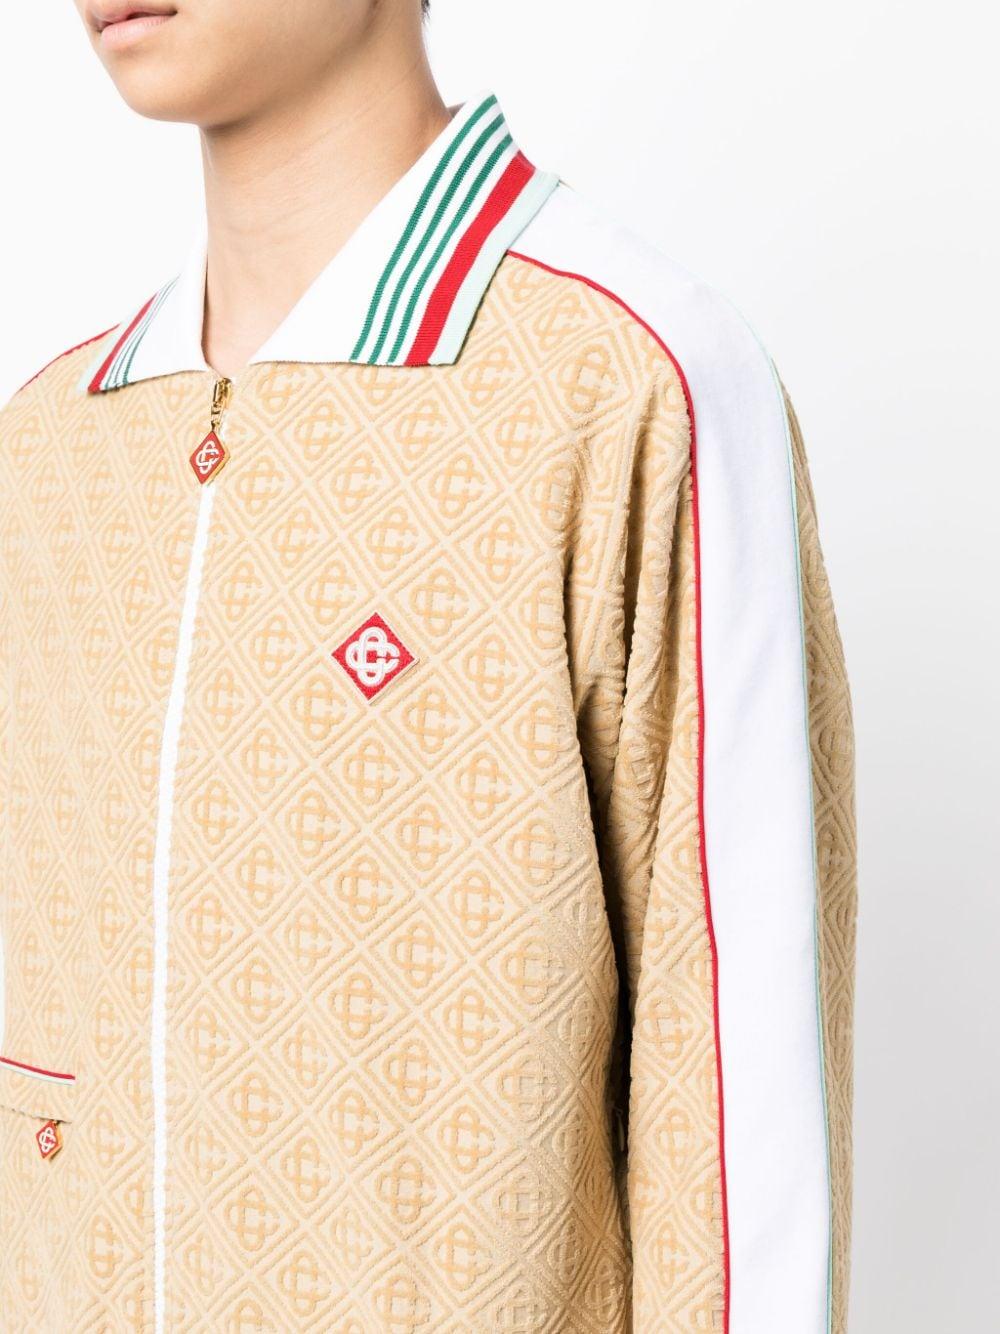 Jacquard Monogram Jacket - Casablanca - Man